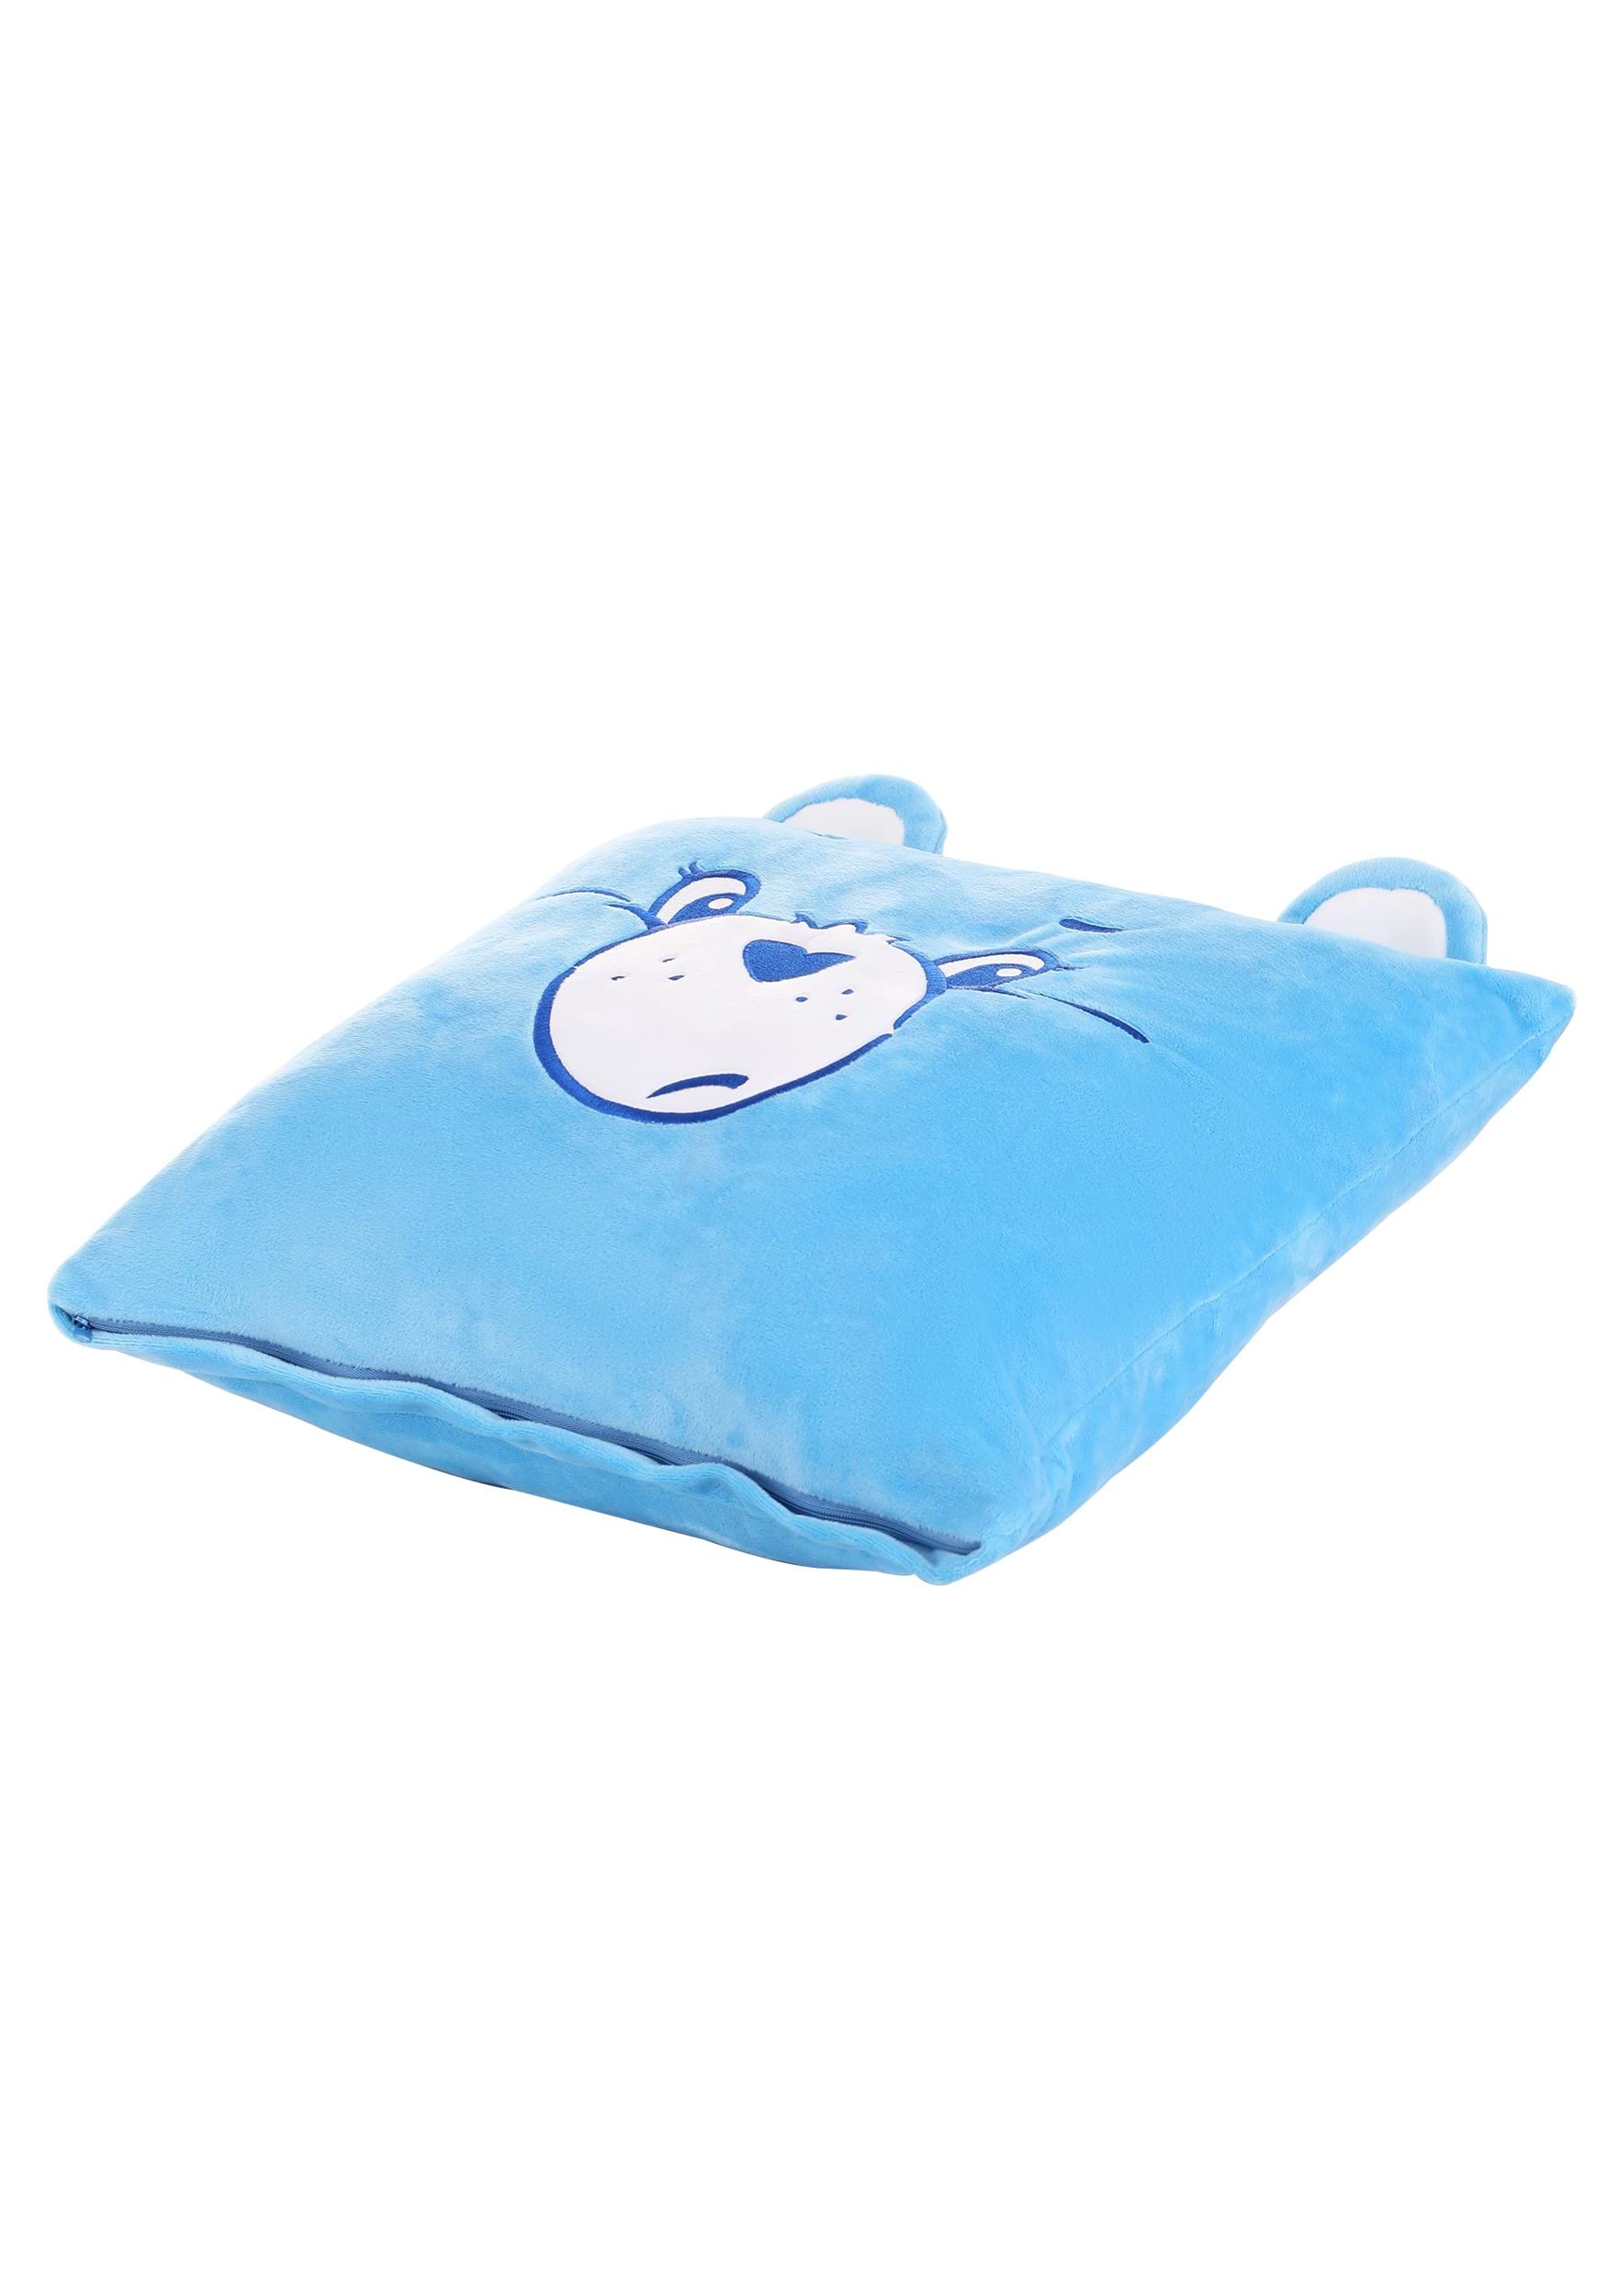 Grumpy Bears Care Bears Plush Pillow , Care Bears Home & Office